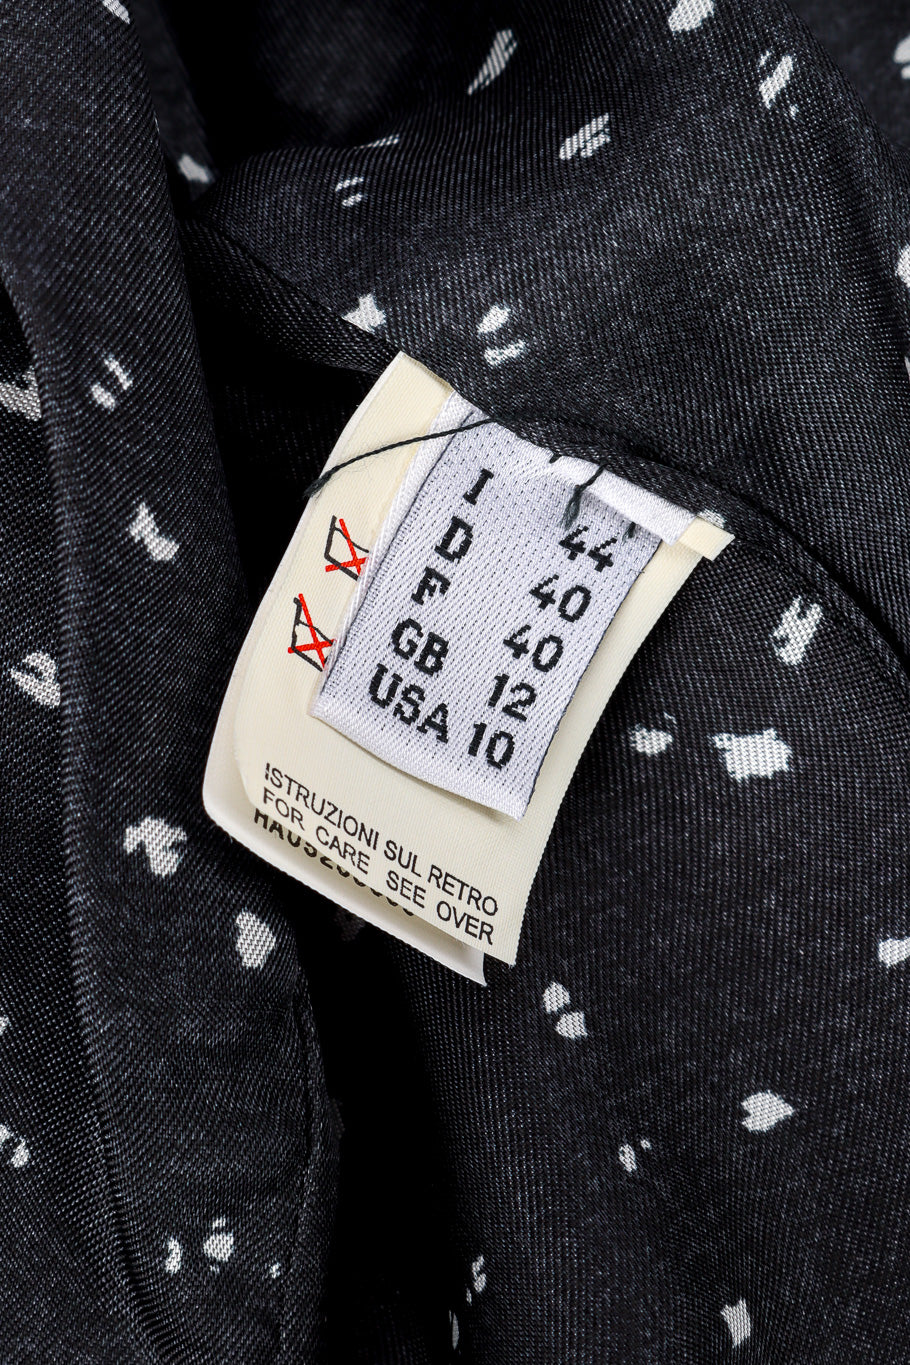 Vintage Moschino Dot Bouclé Jacket and Skirt Set jacket size tag closeup @recessla